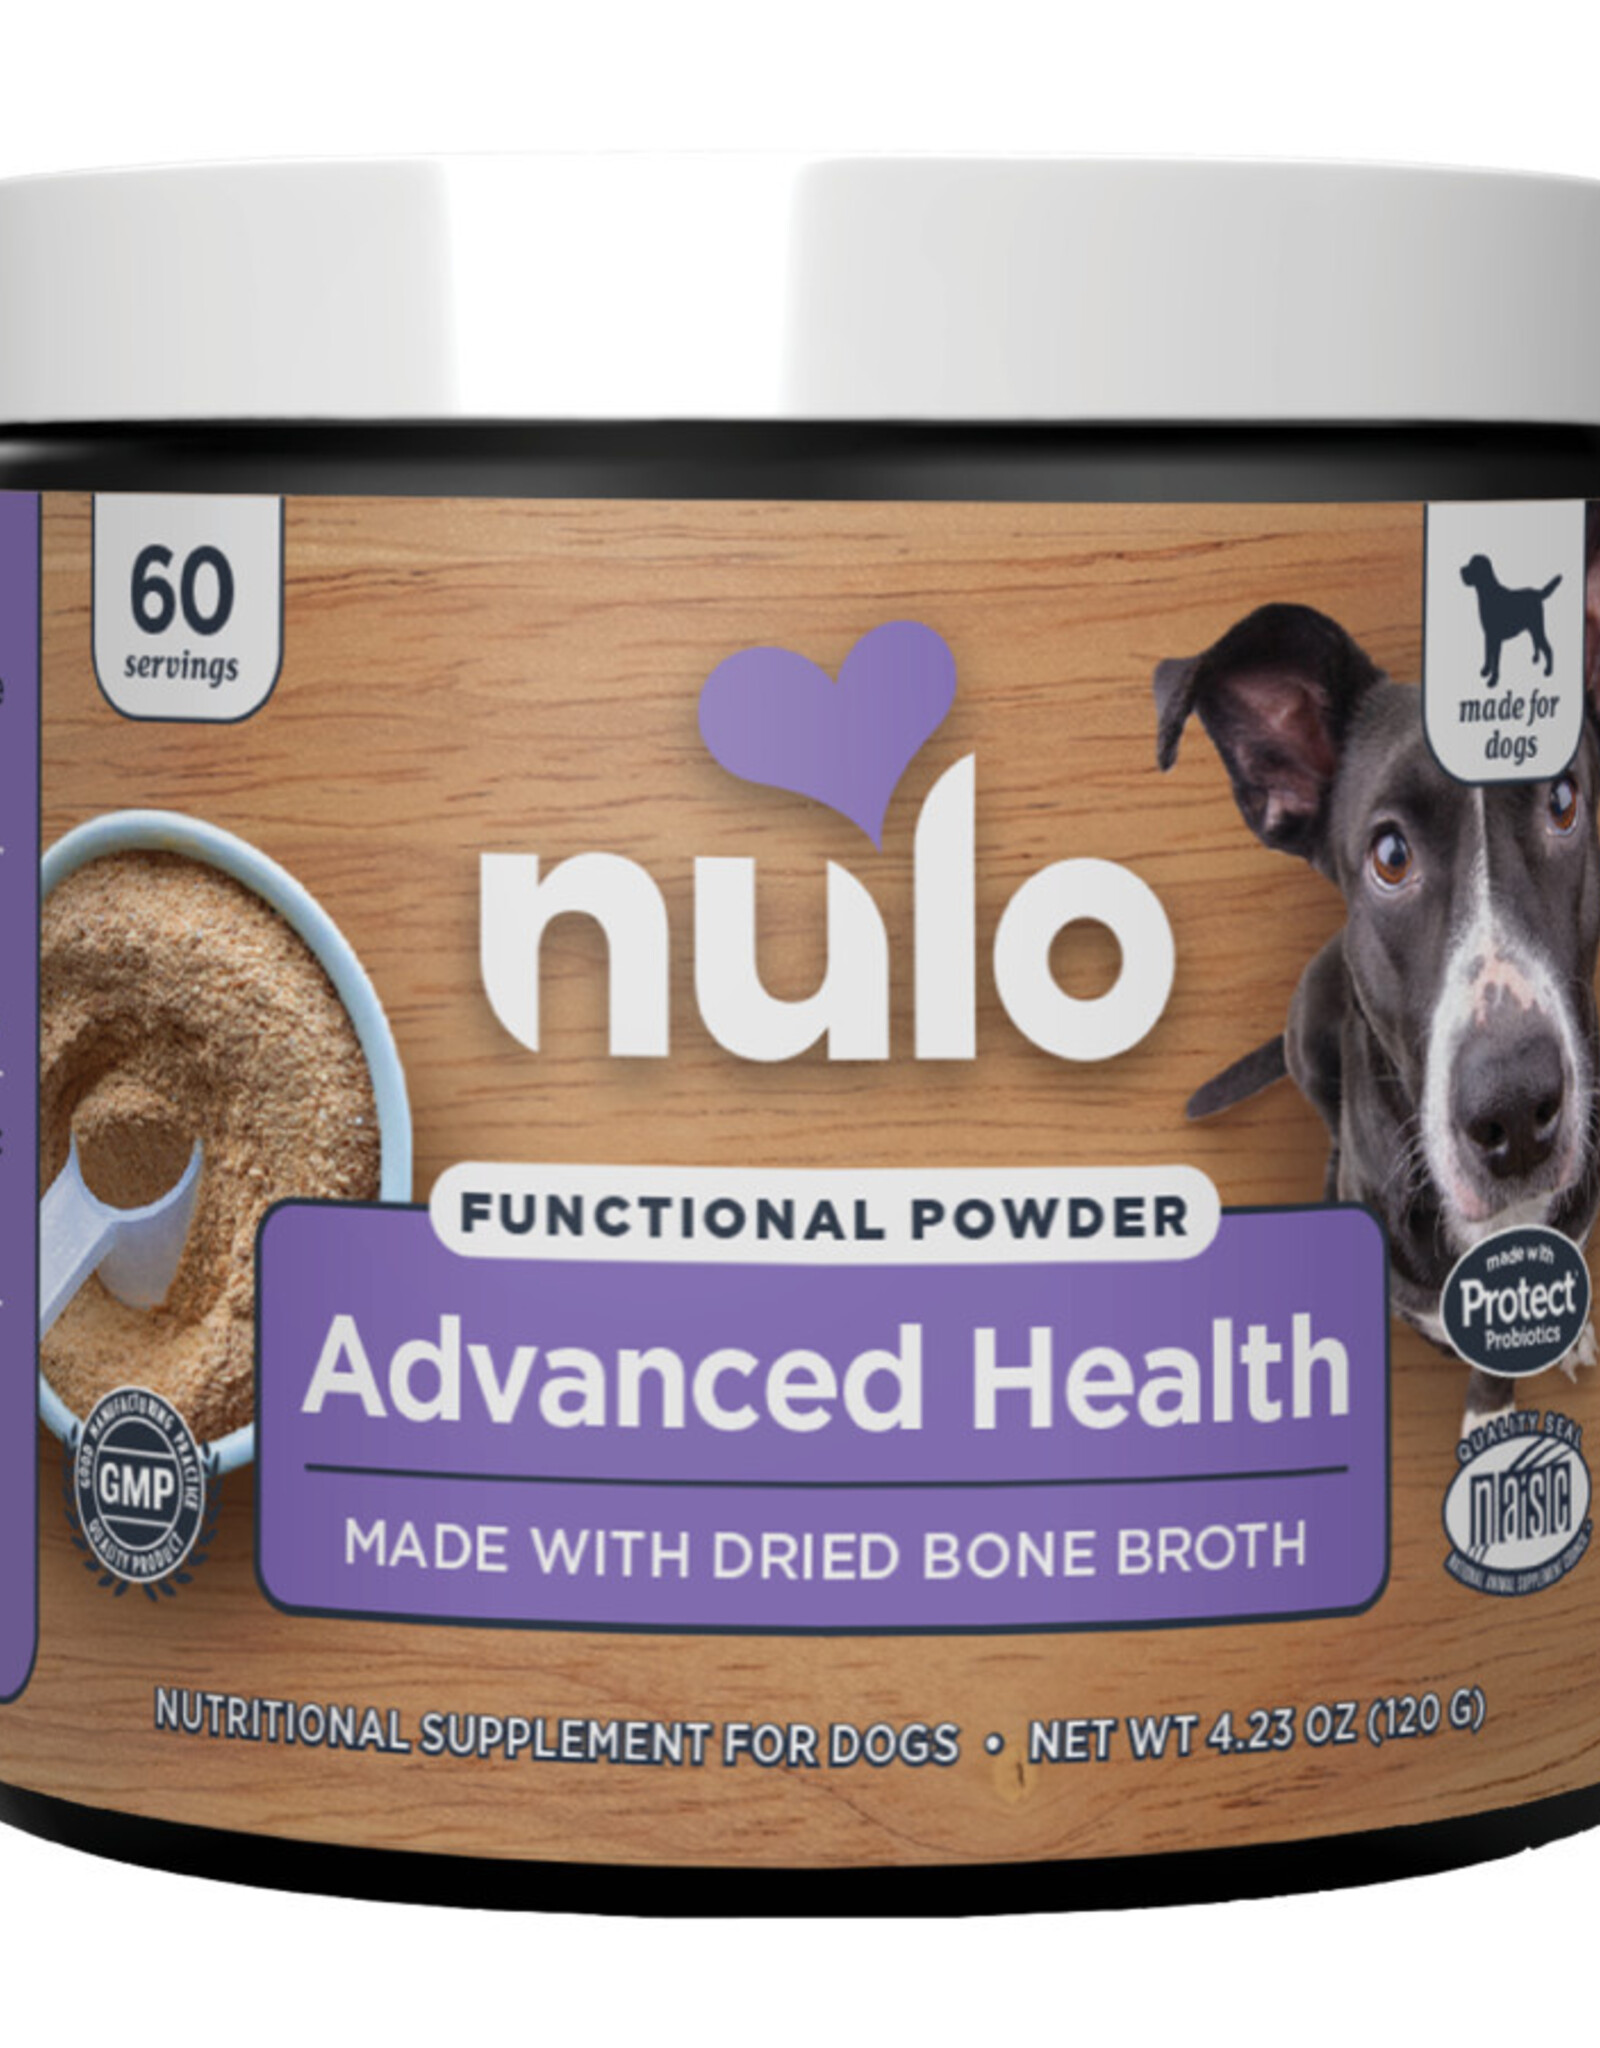 Nulo Functional Powder Advanced Health Dog Supplement